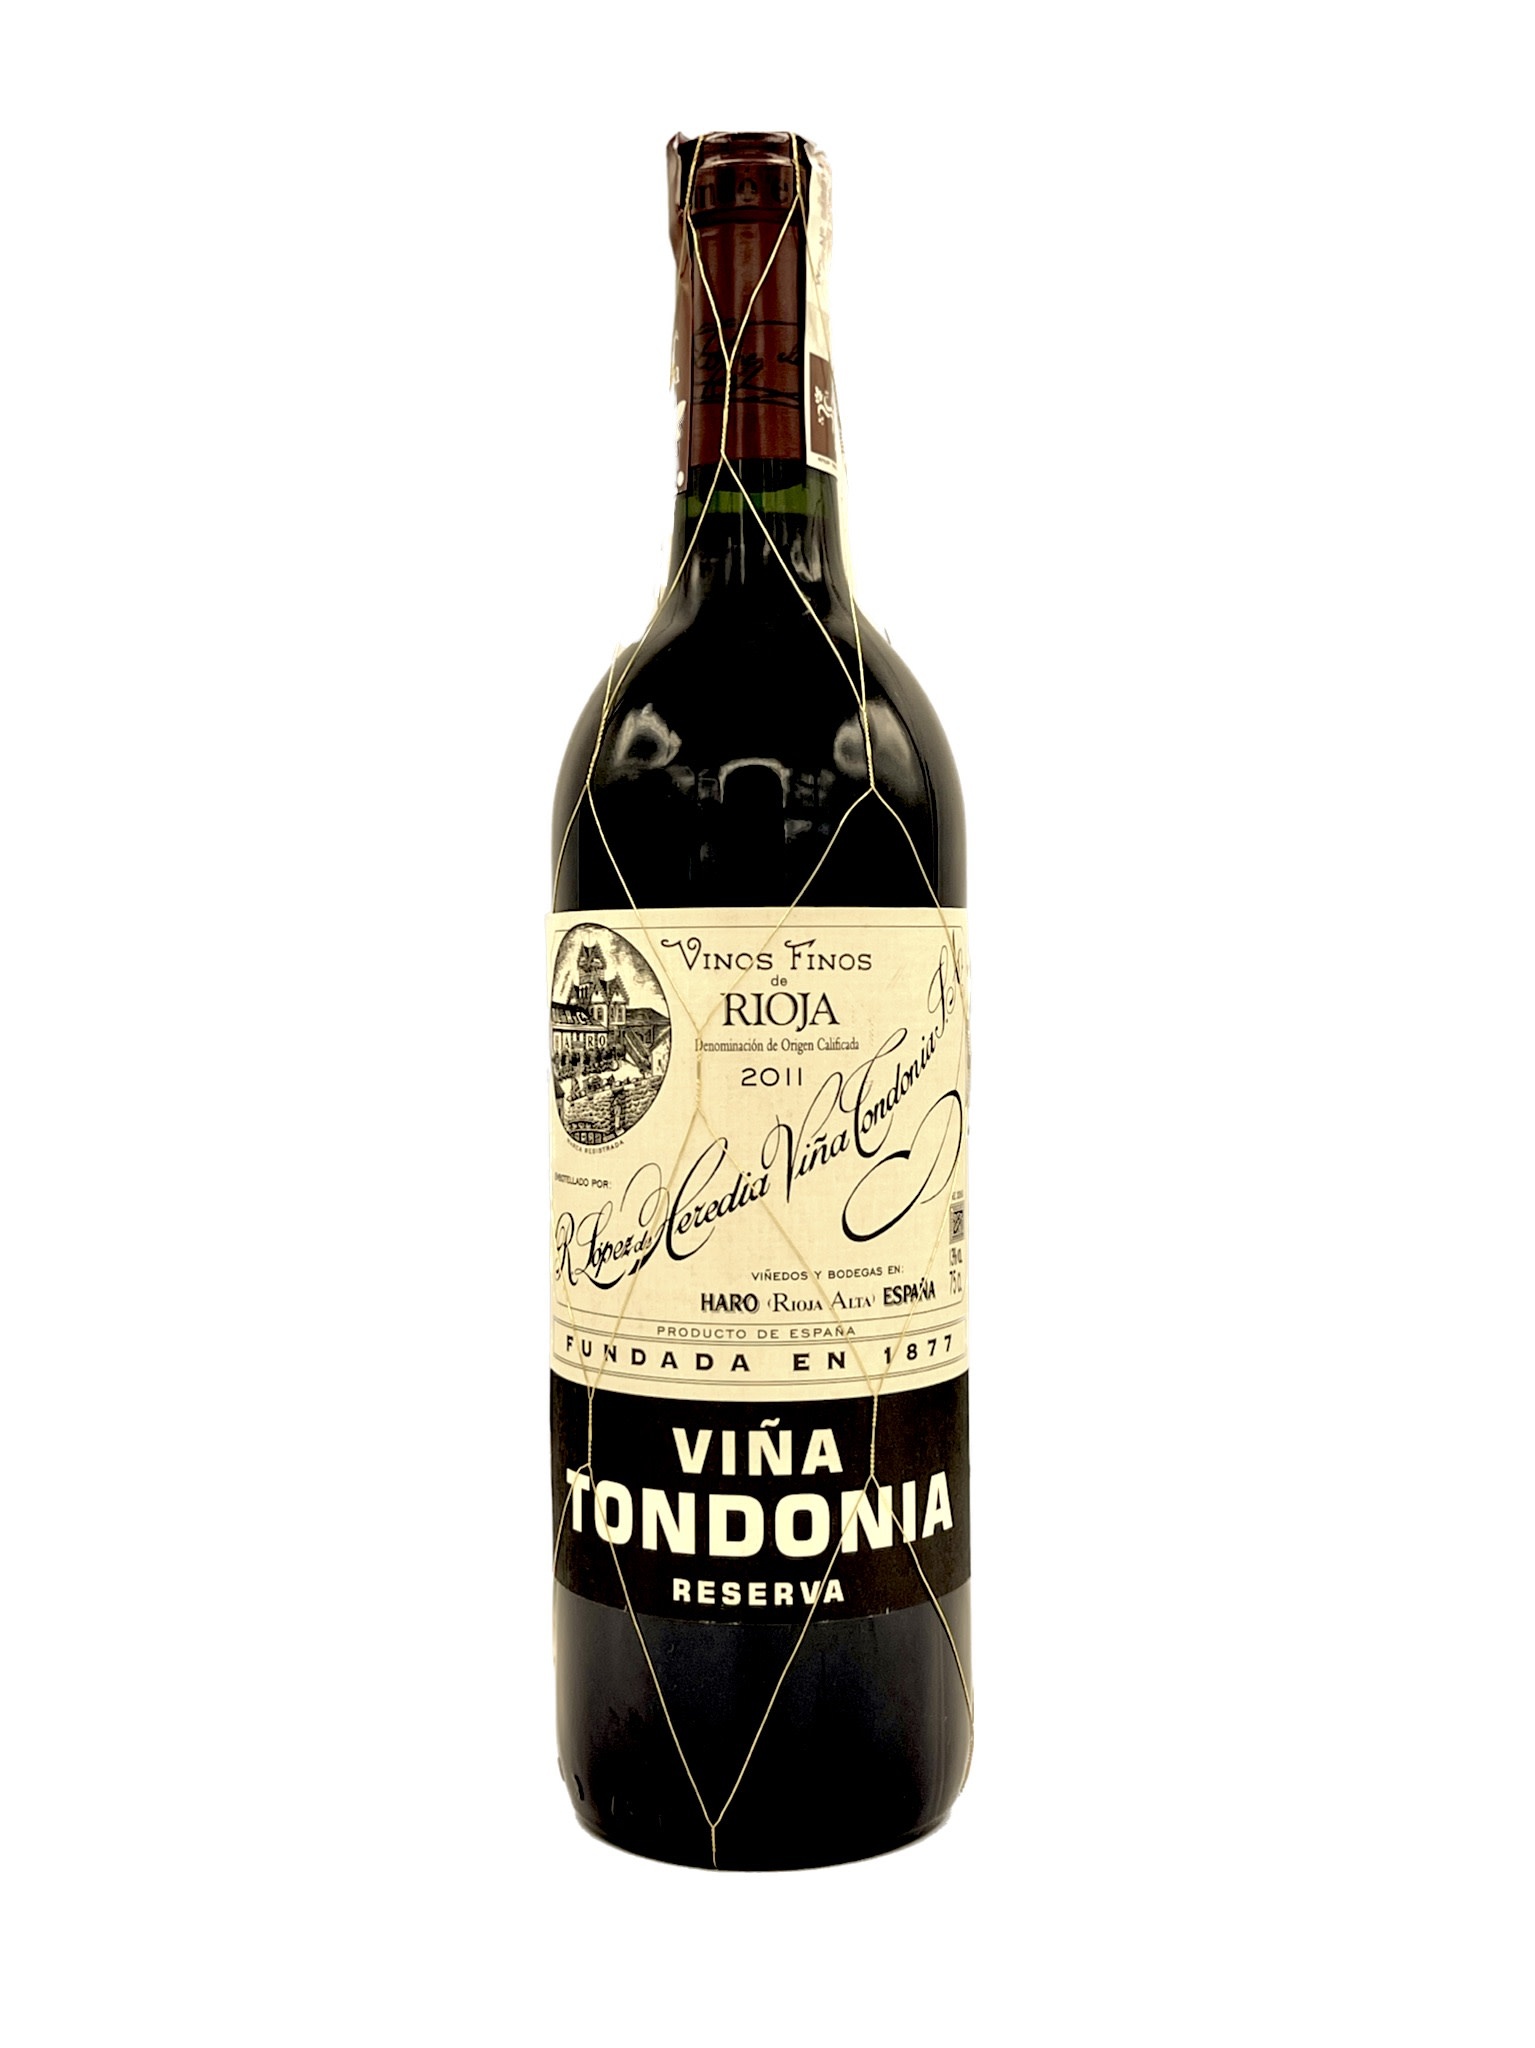 Rioja Alta “Tondonia” 2011 Lopez de Heredia 750ml